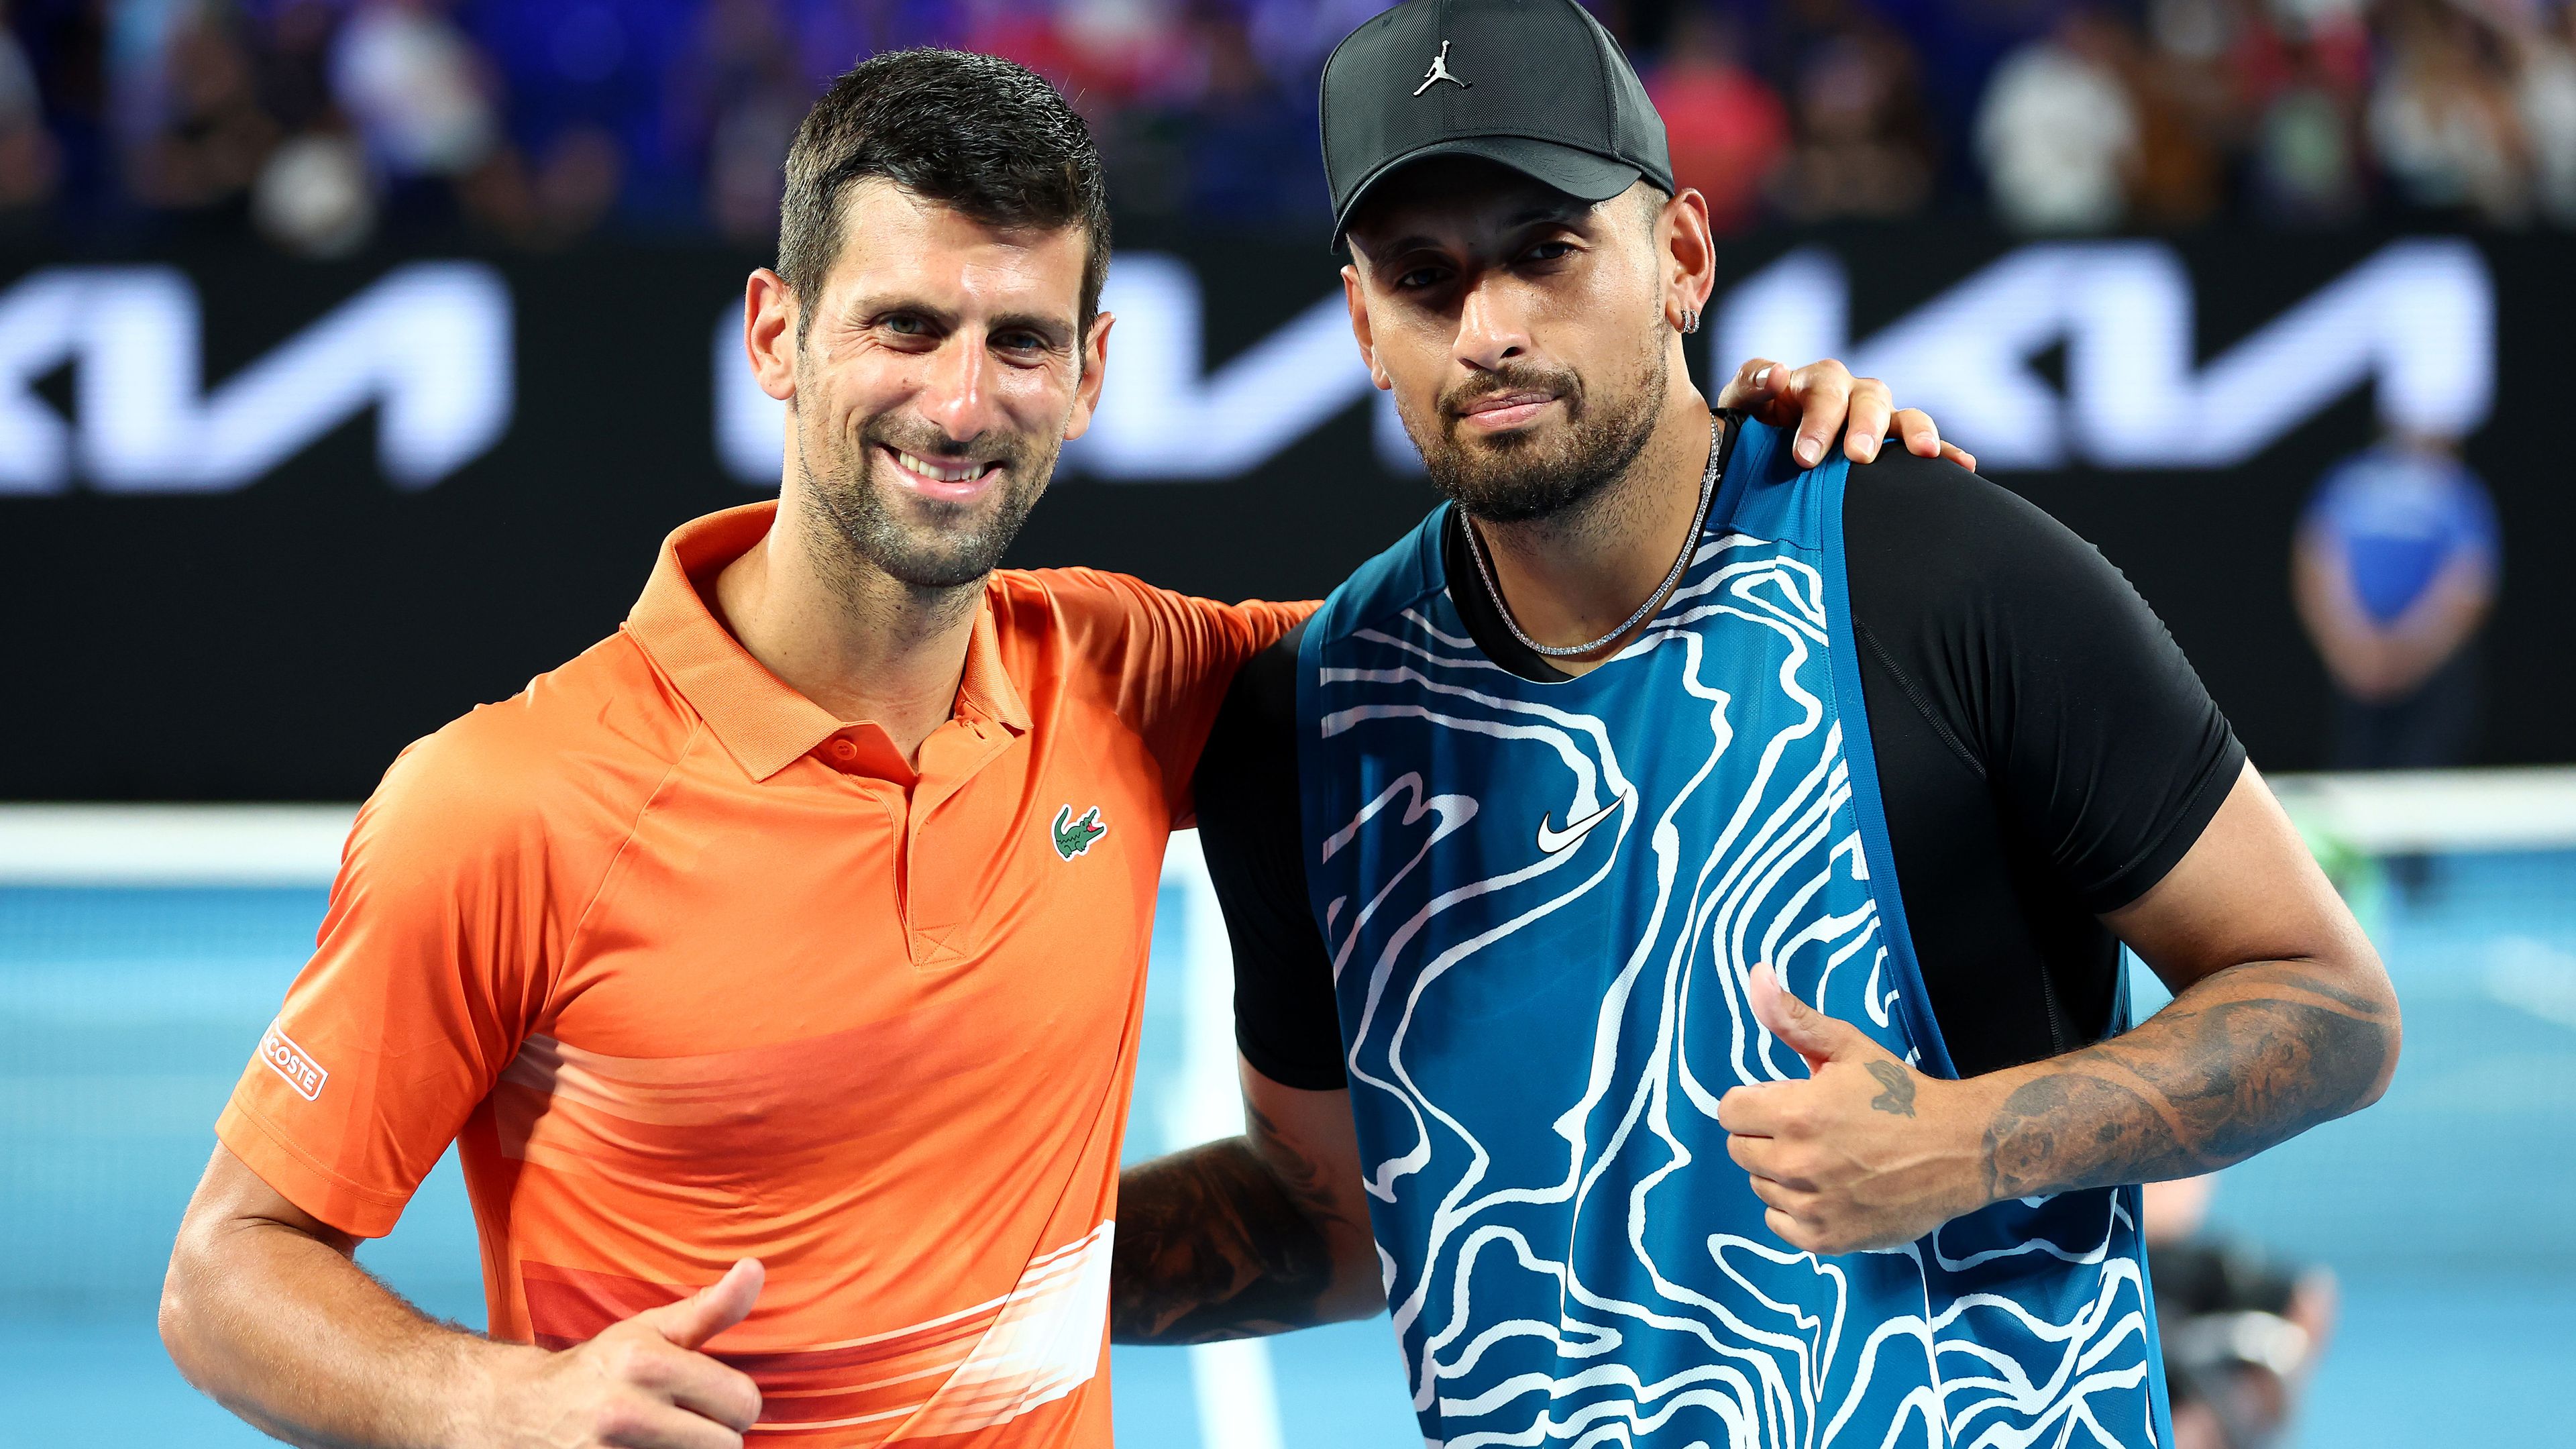 Nick Kyrgios' heartfelt tribute to 'emotional' Novak Djokovic after exhibition clash